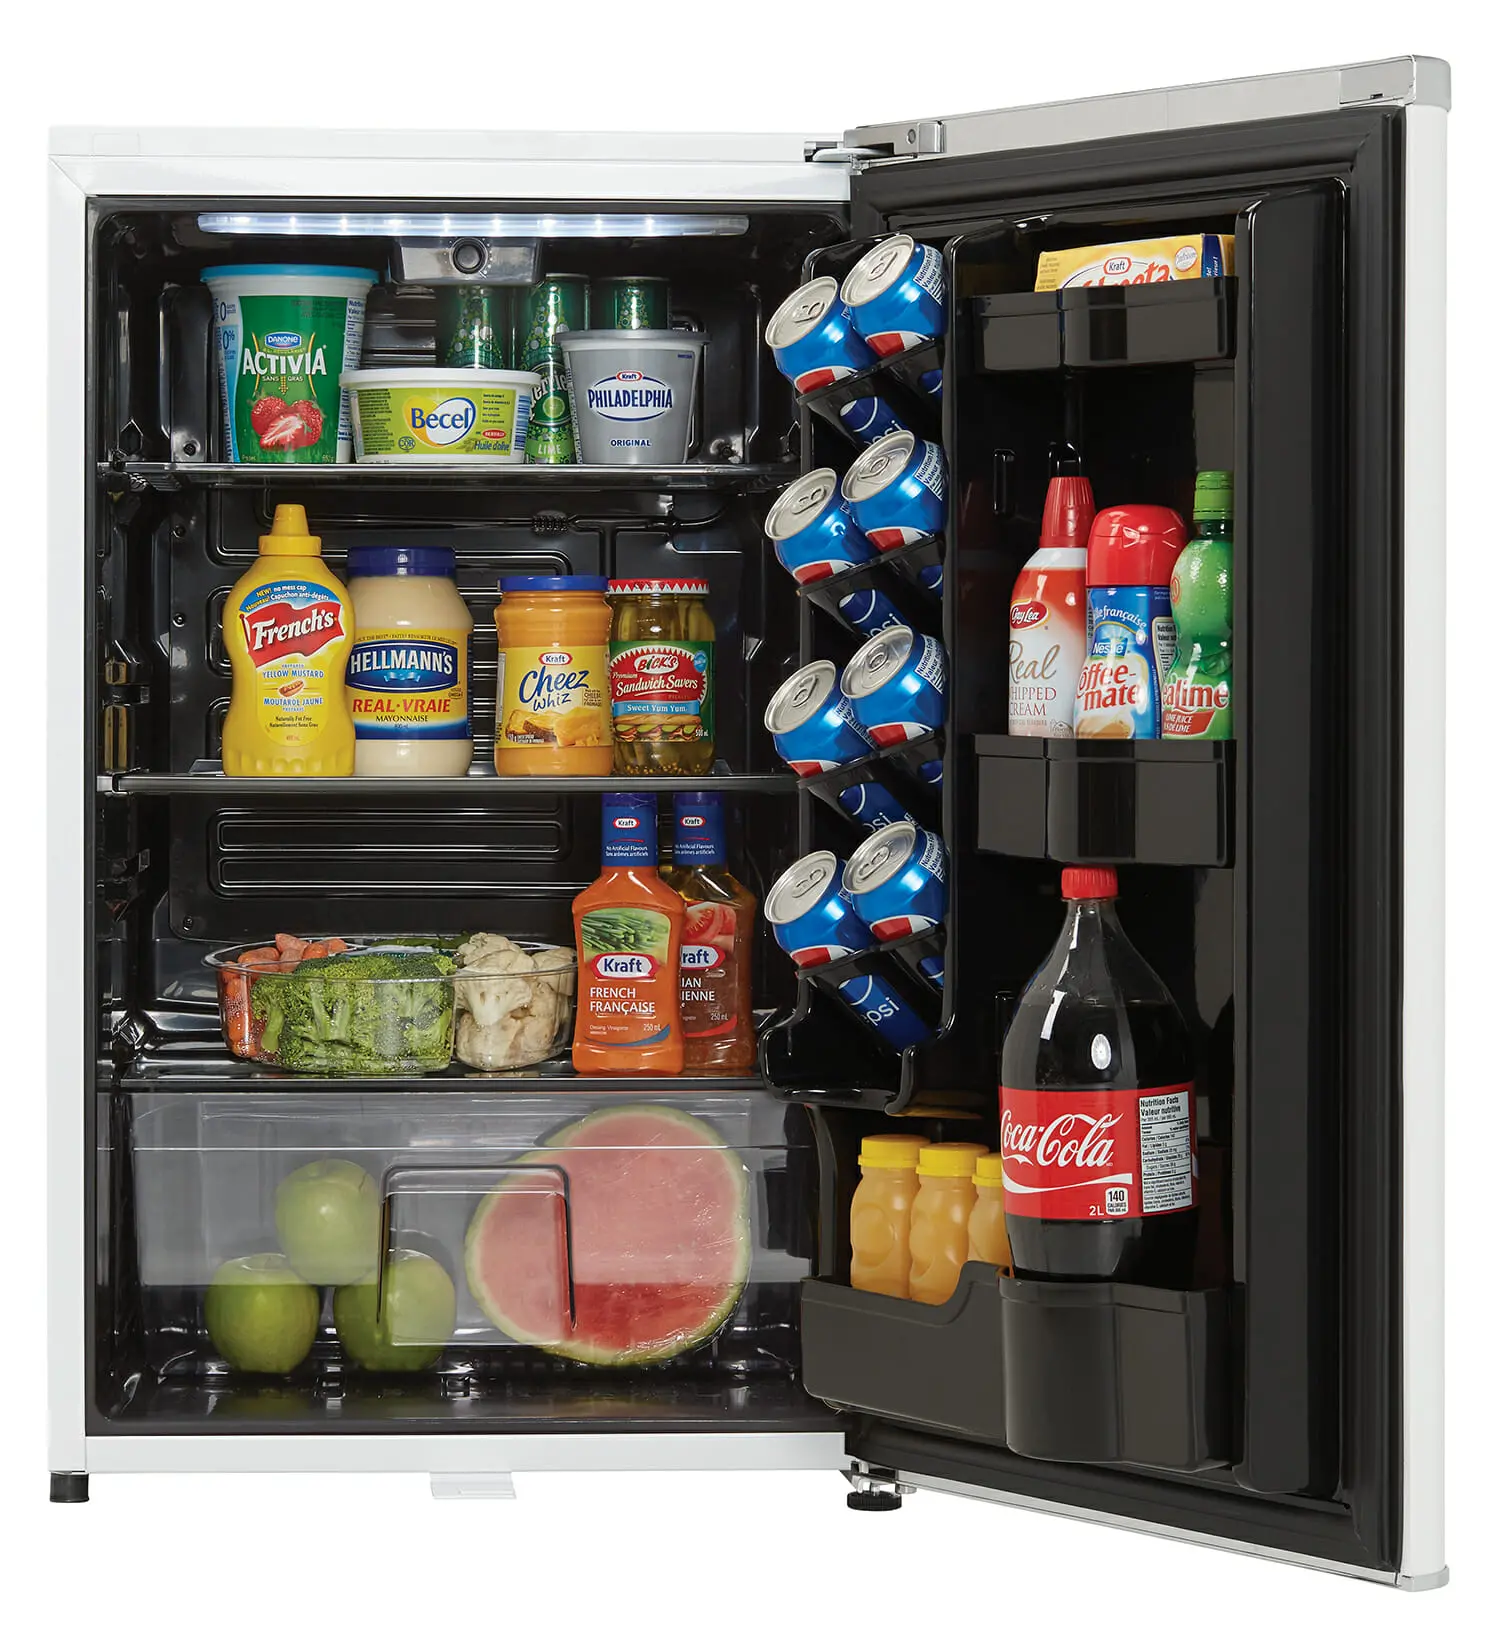 мини-холодильник в общежитии